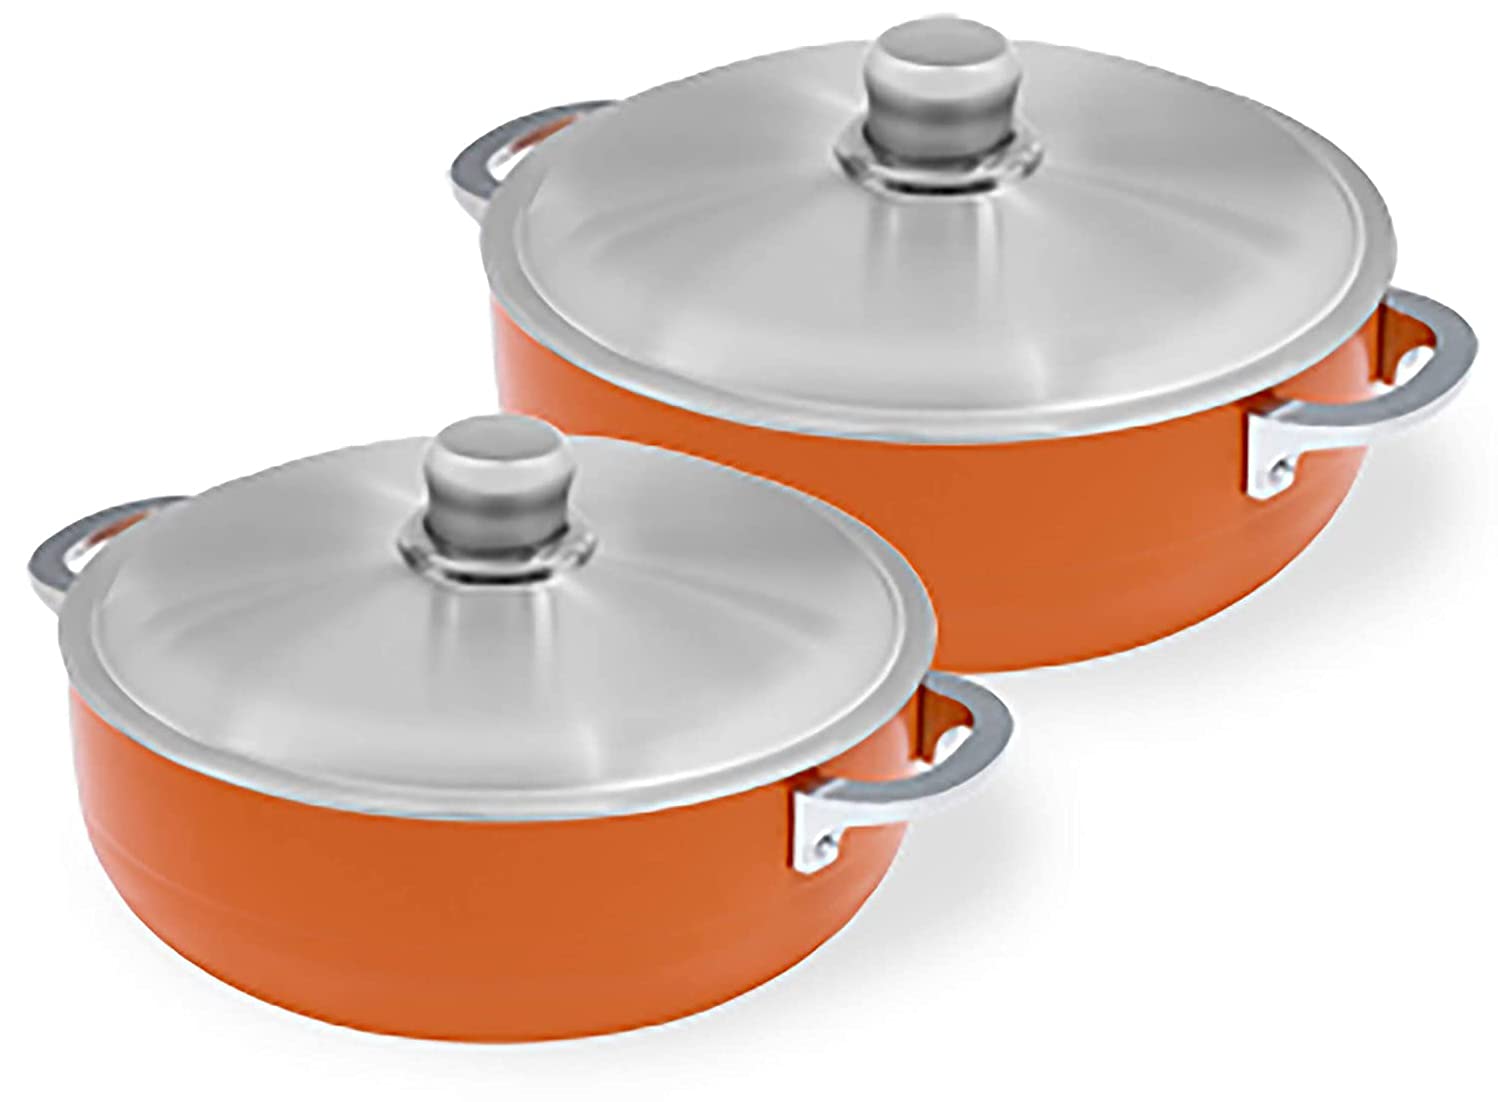 IMUSA USA 2 Piece Orange Caldero (Dutch Oven Set) with Aluminum Lid 4.4Qt, 6.9Qt